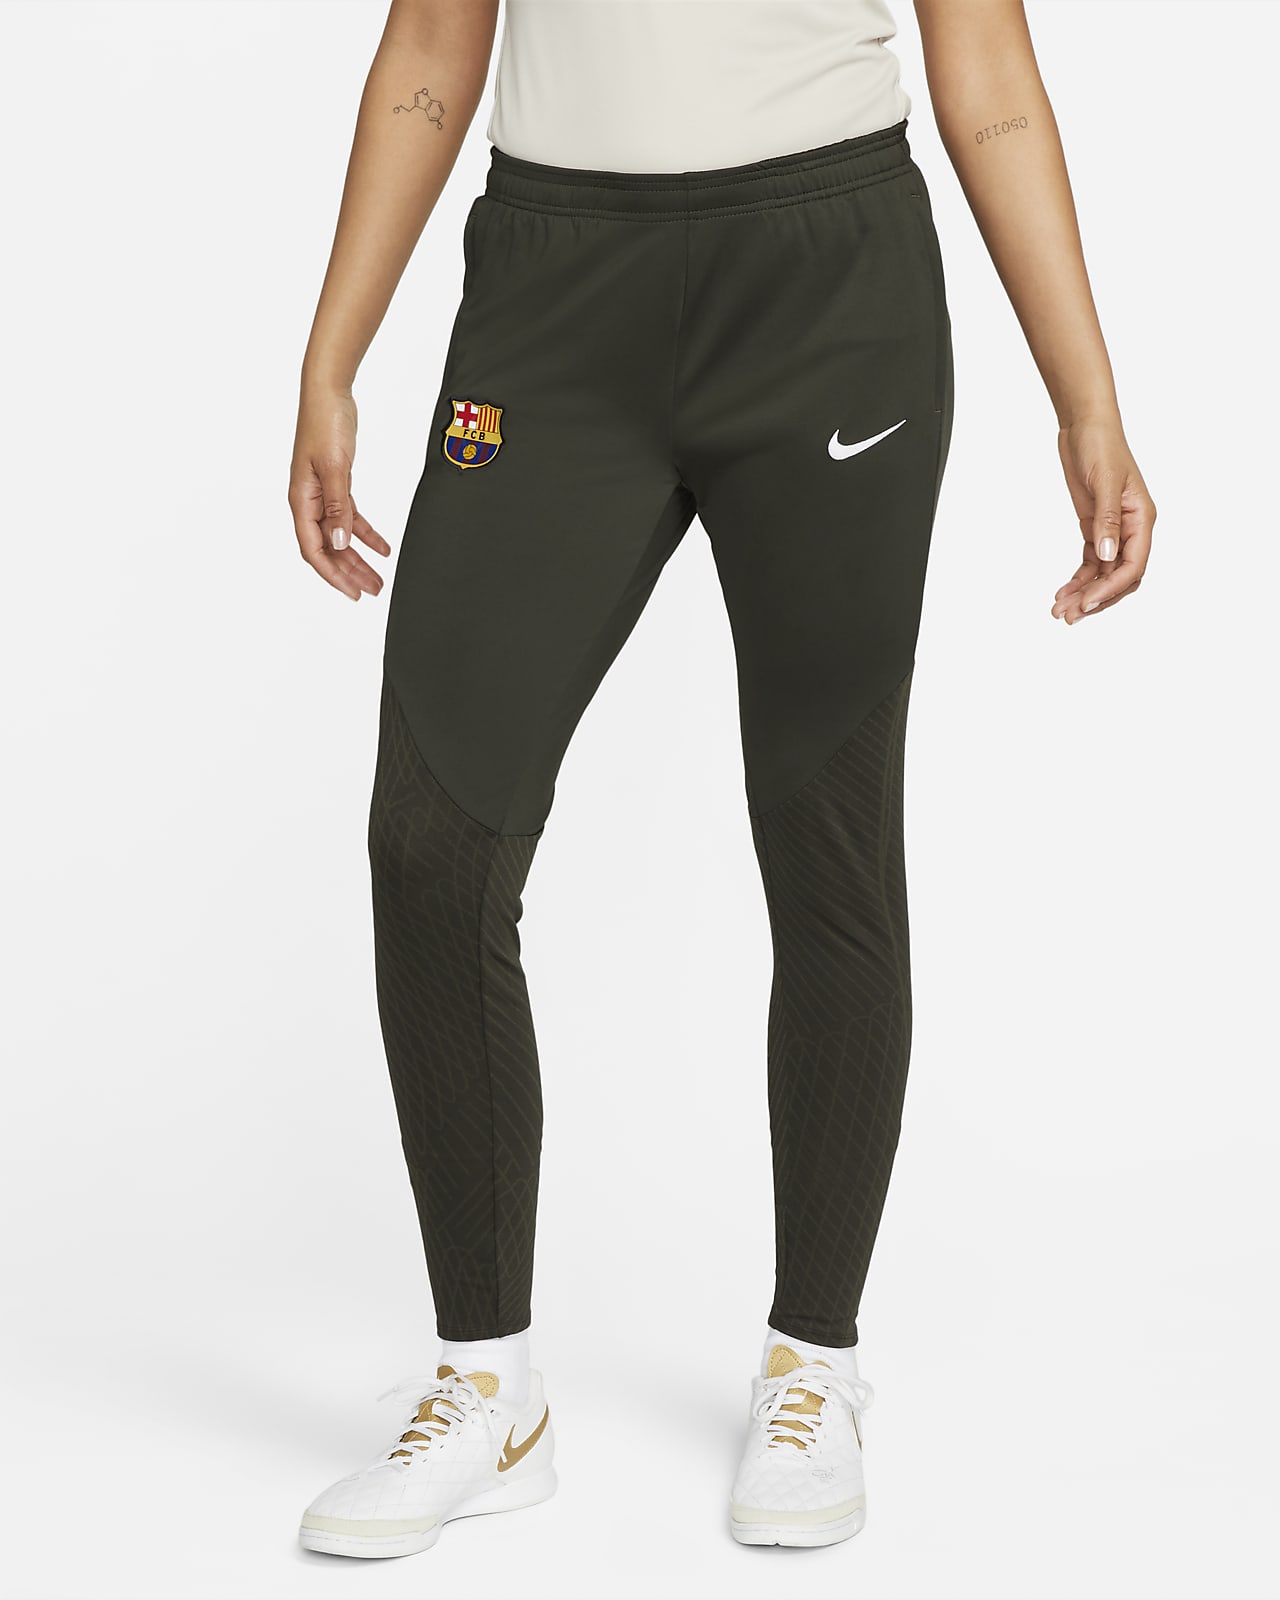 Nike Flex Swift Dri-fit Running Pants | Track pants mens, Running pants, Nike  outfits